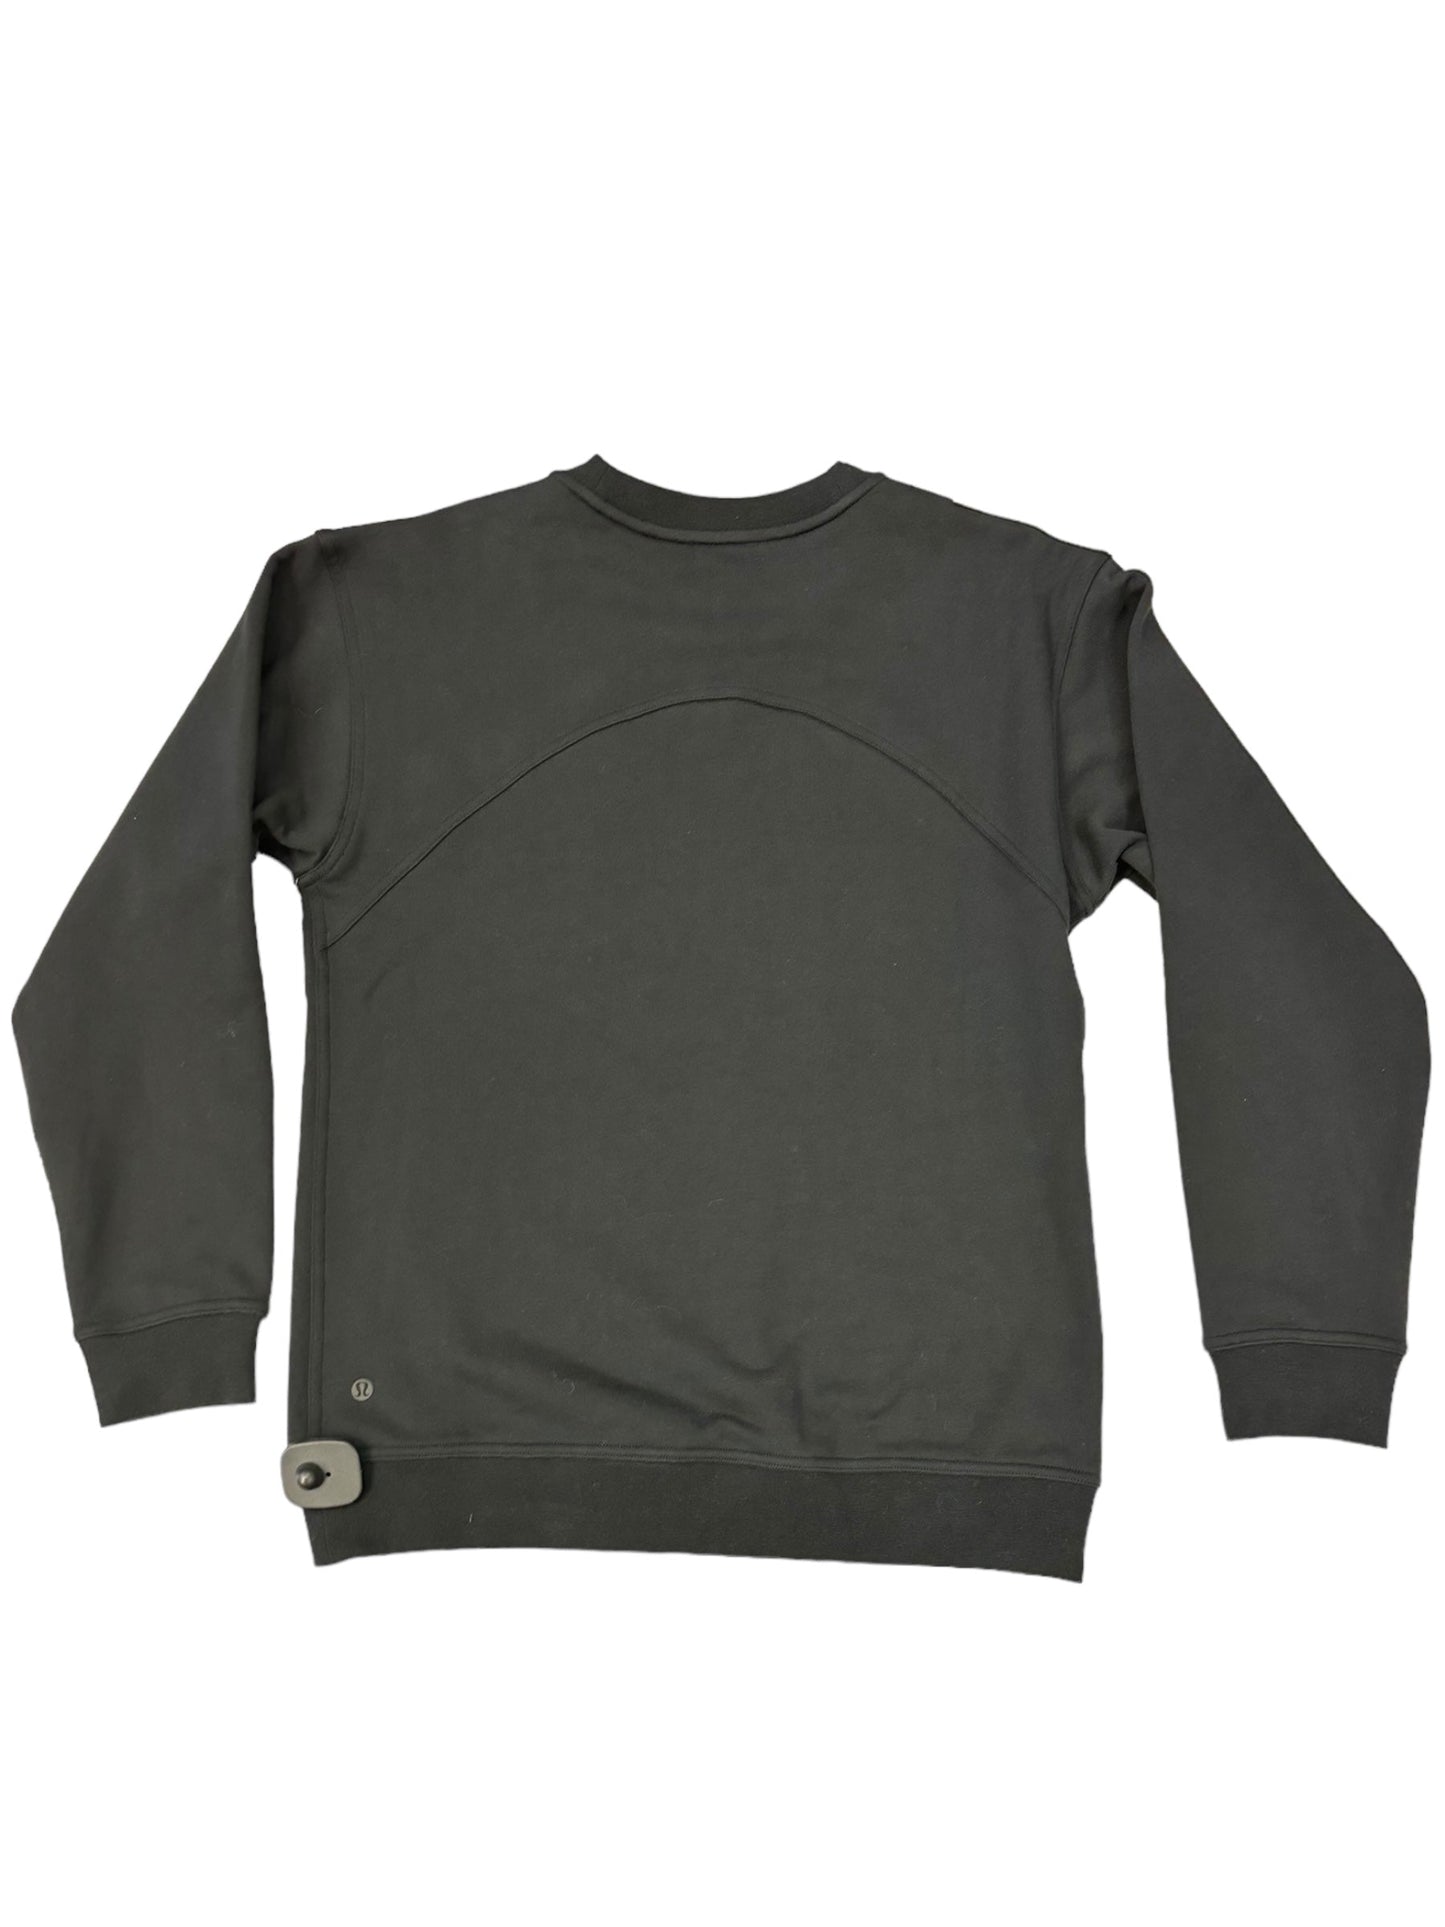 Black Sweatshirt Crewneck Lululemon, Size M